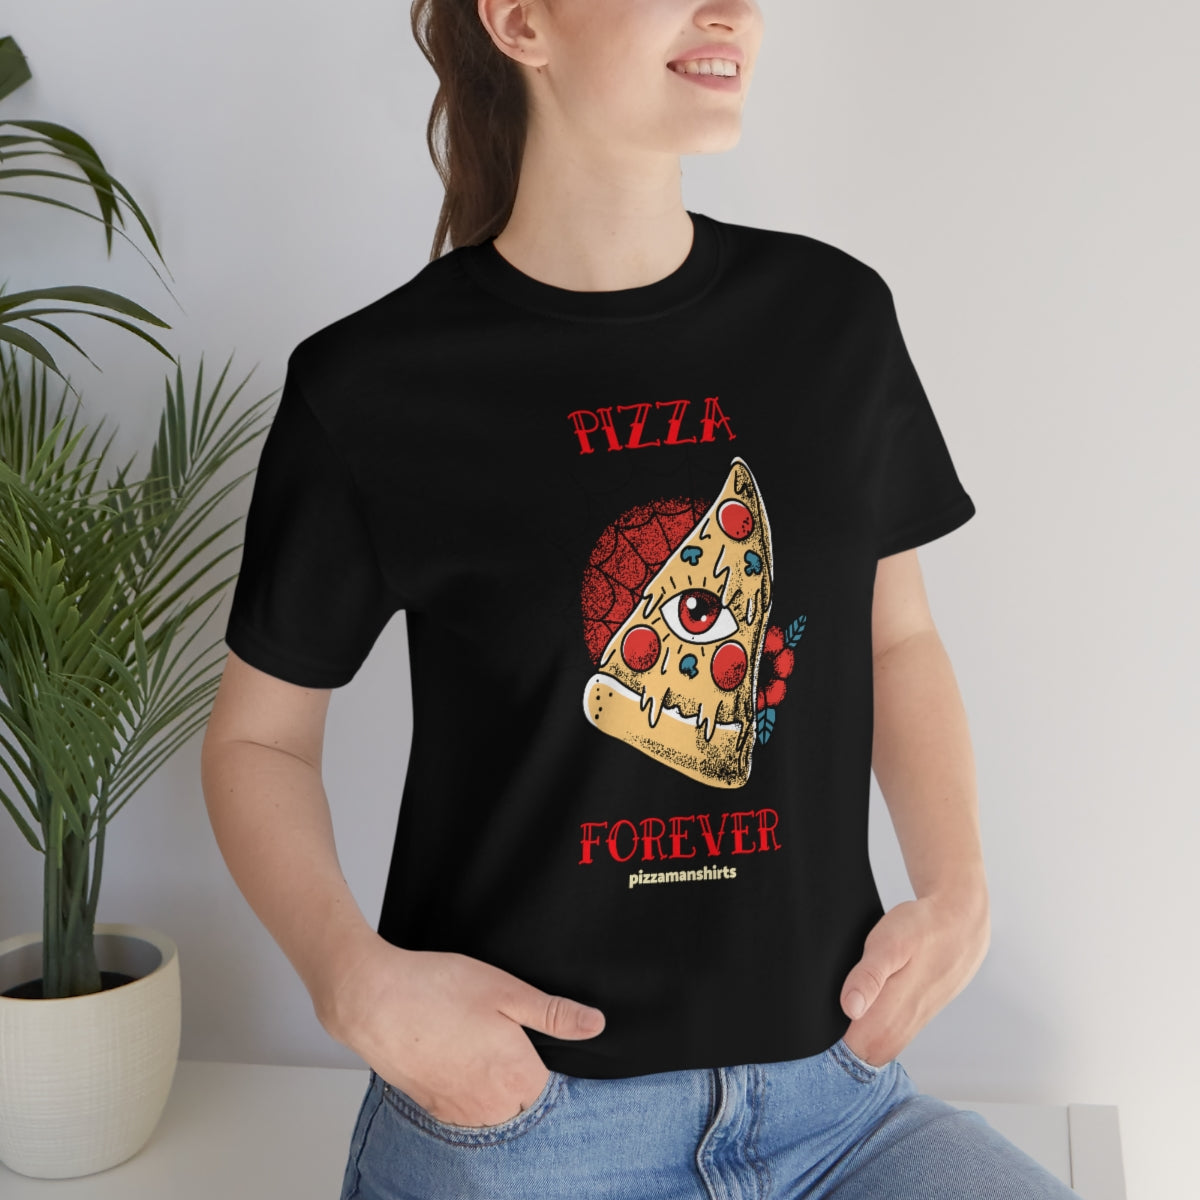 PIZZA FOREVER